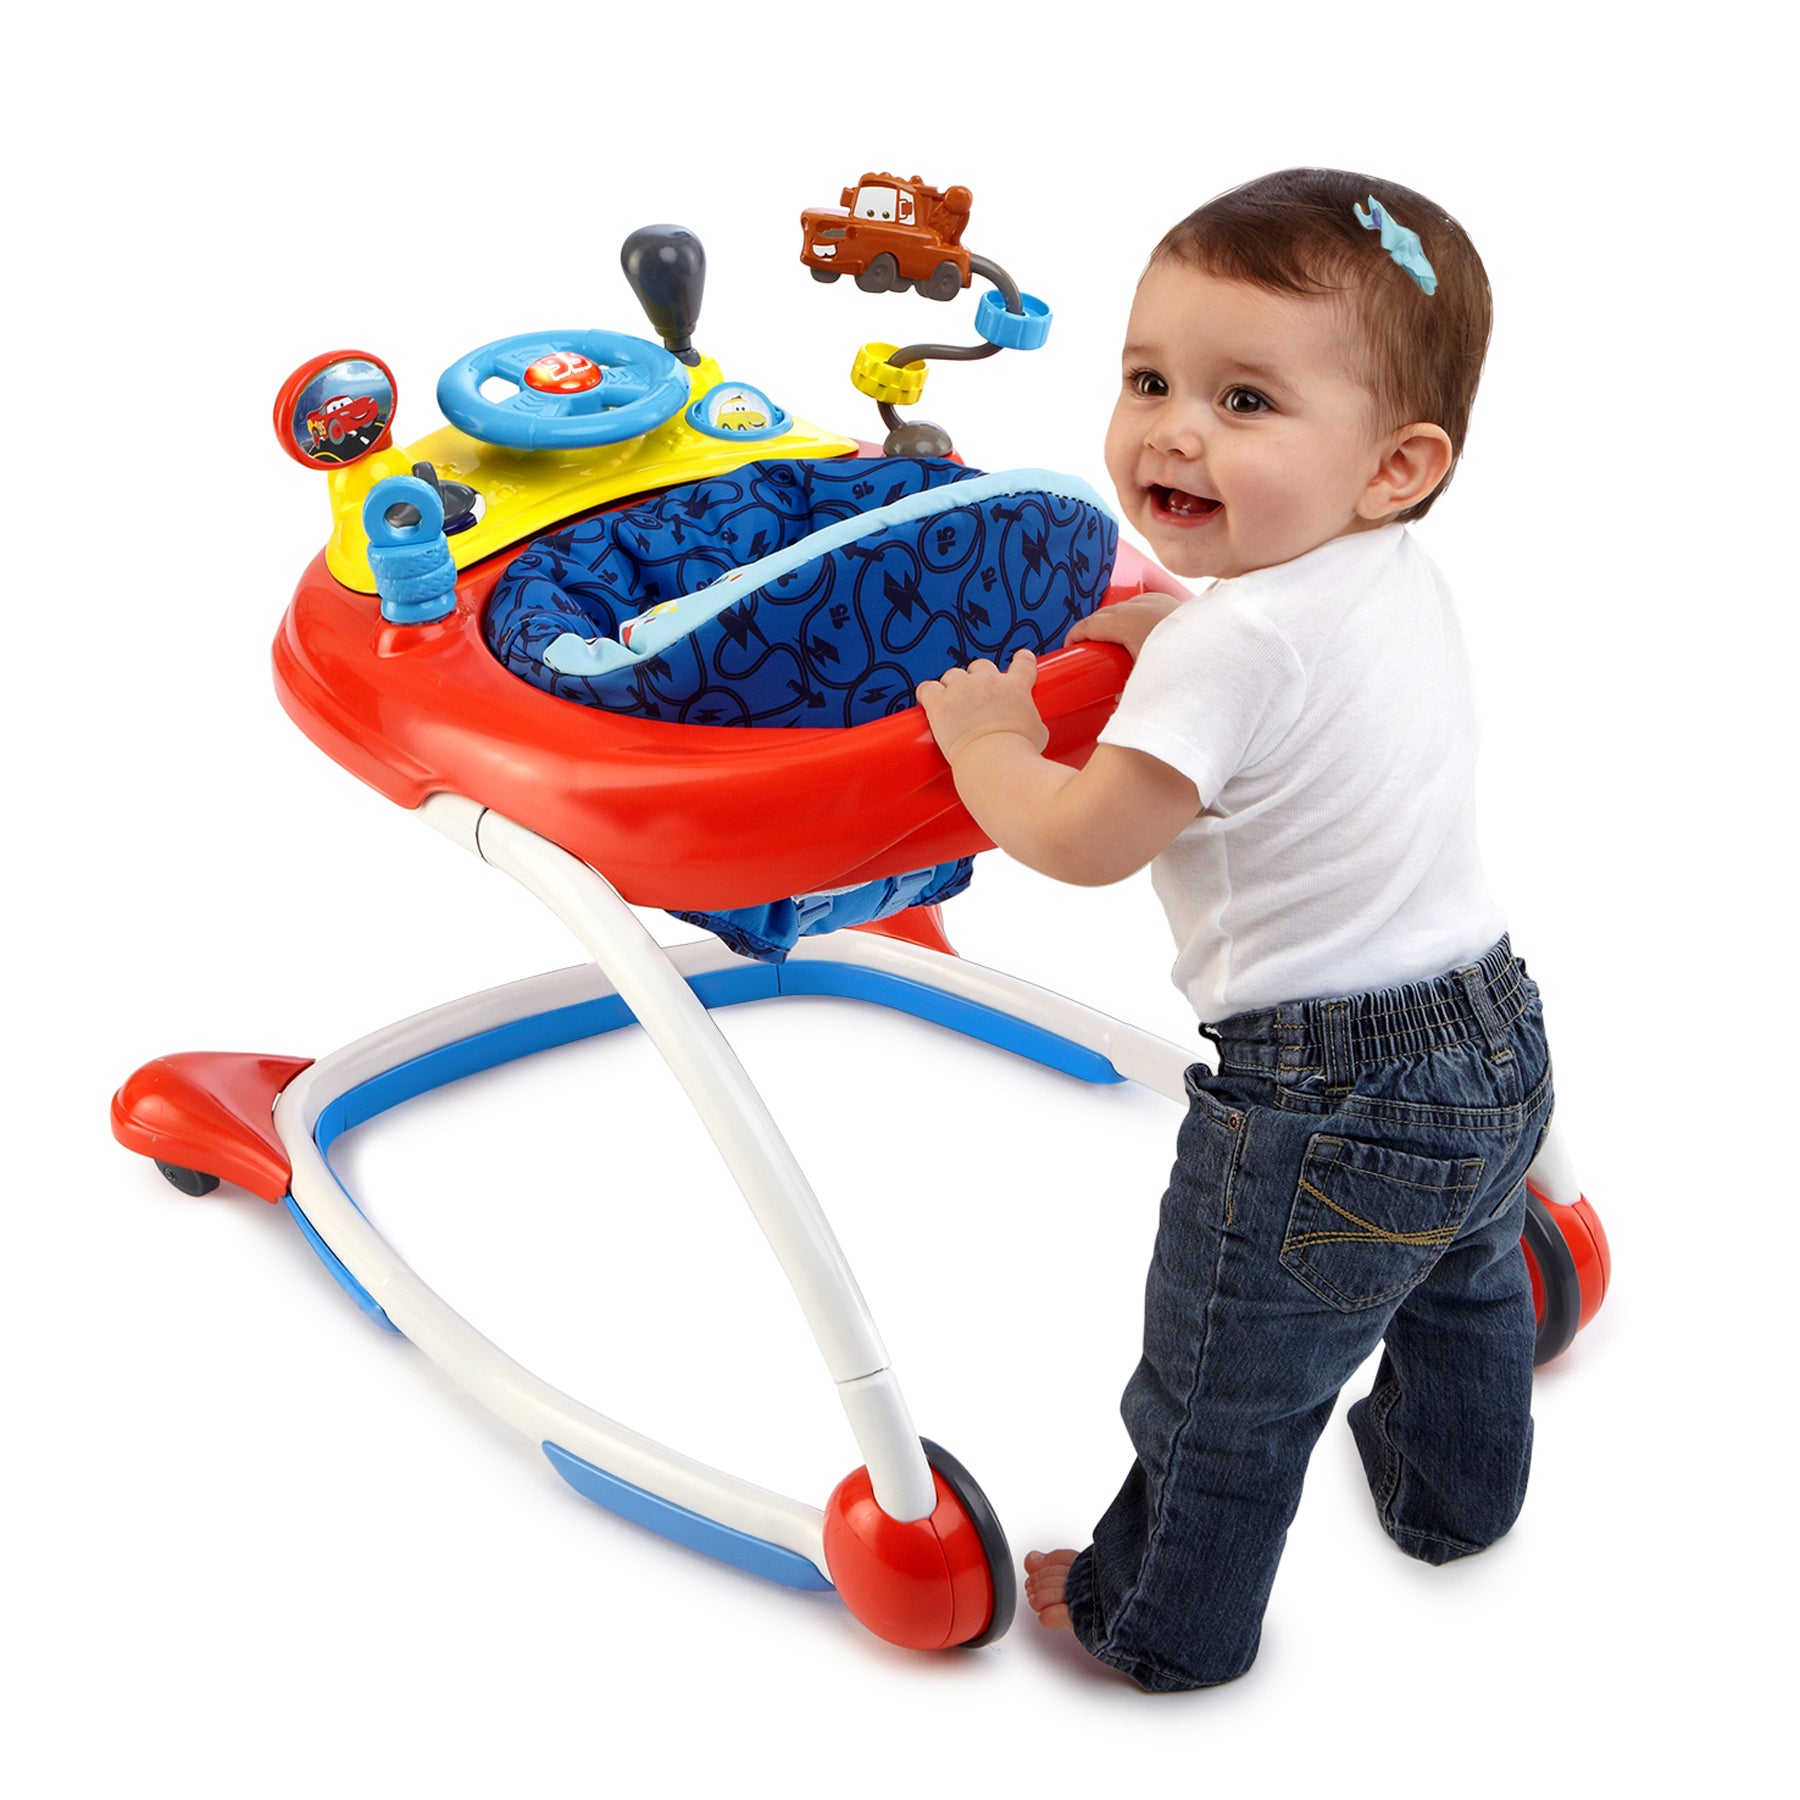 travel size baby walker